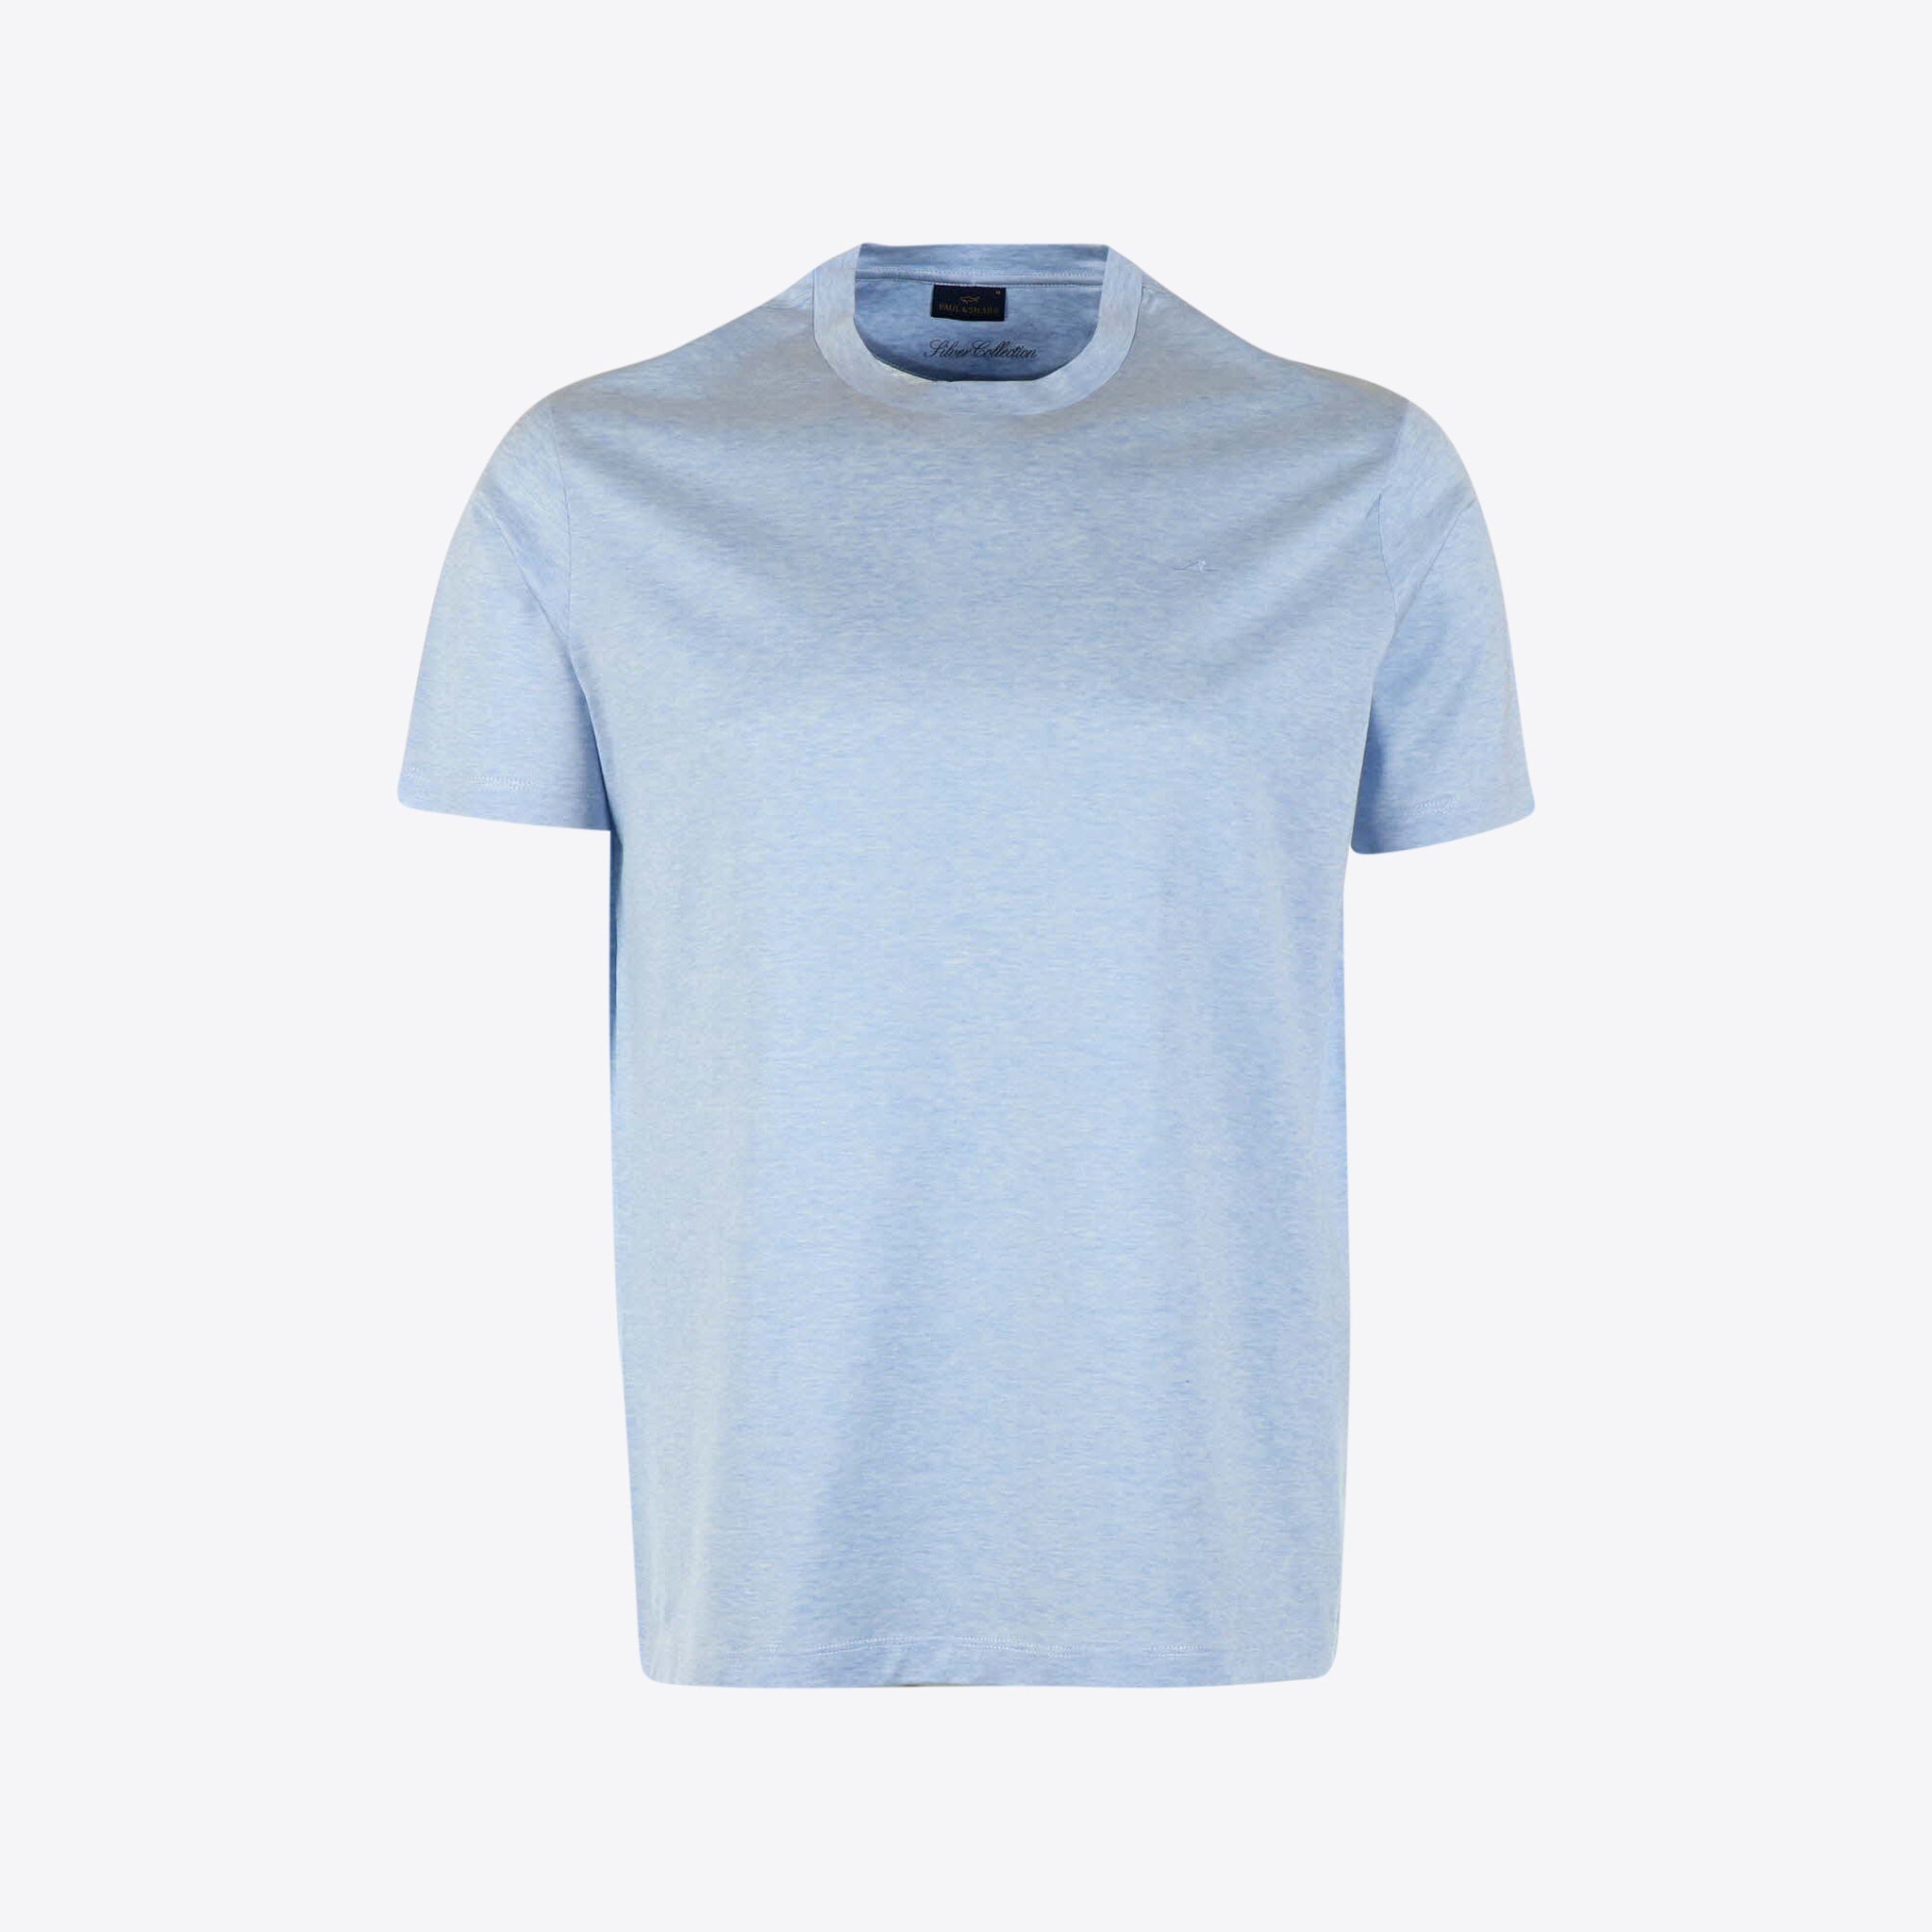 Paul & Shark T-shirt Blauw Melange